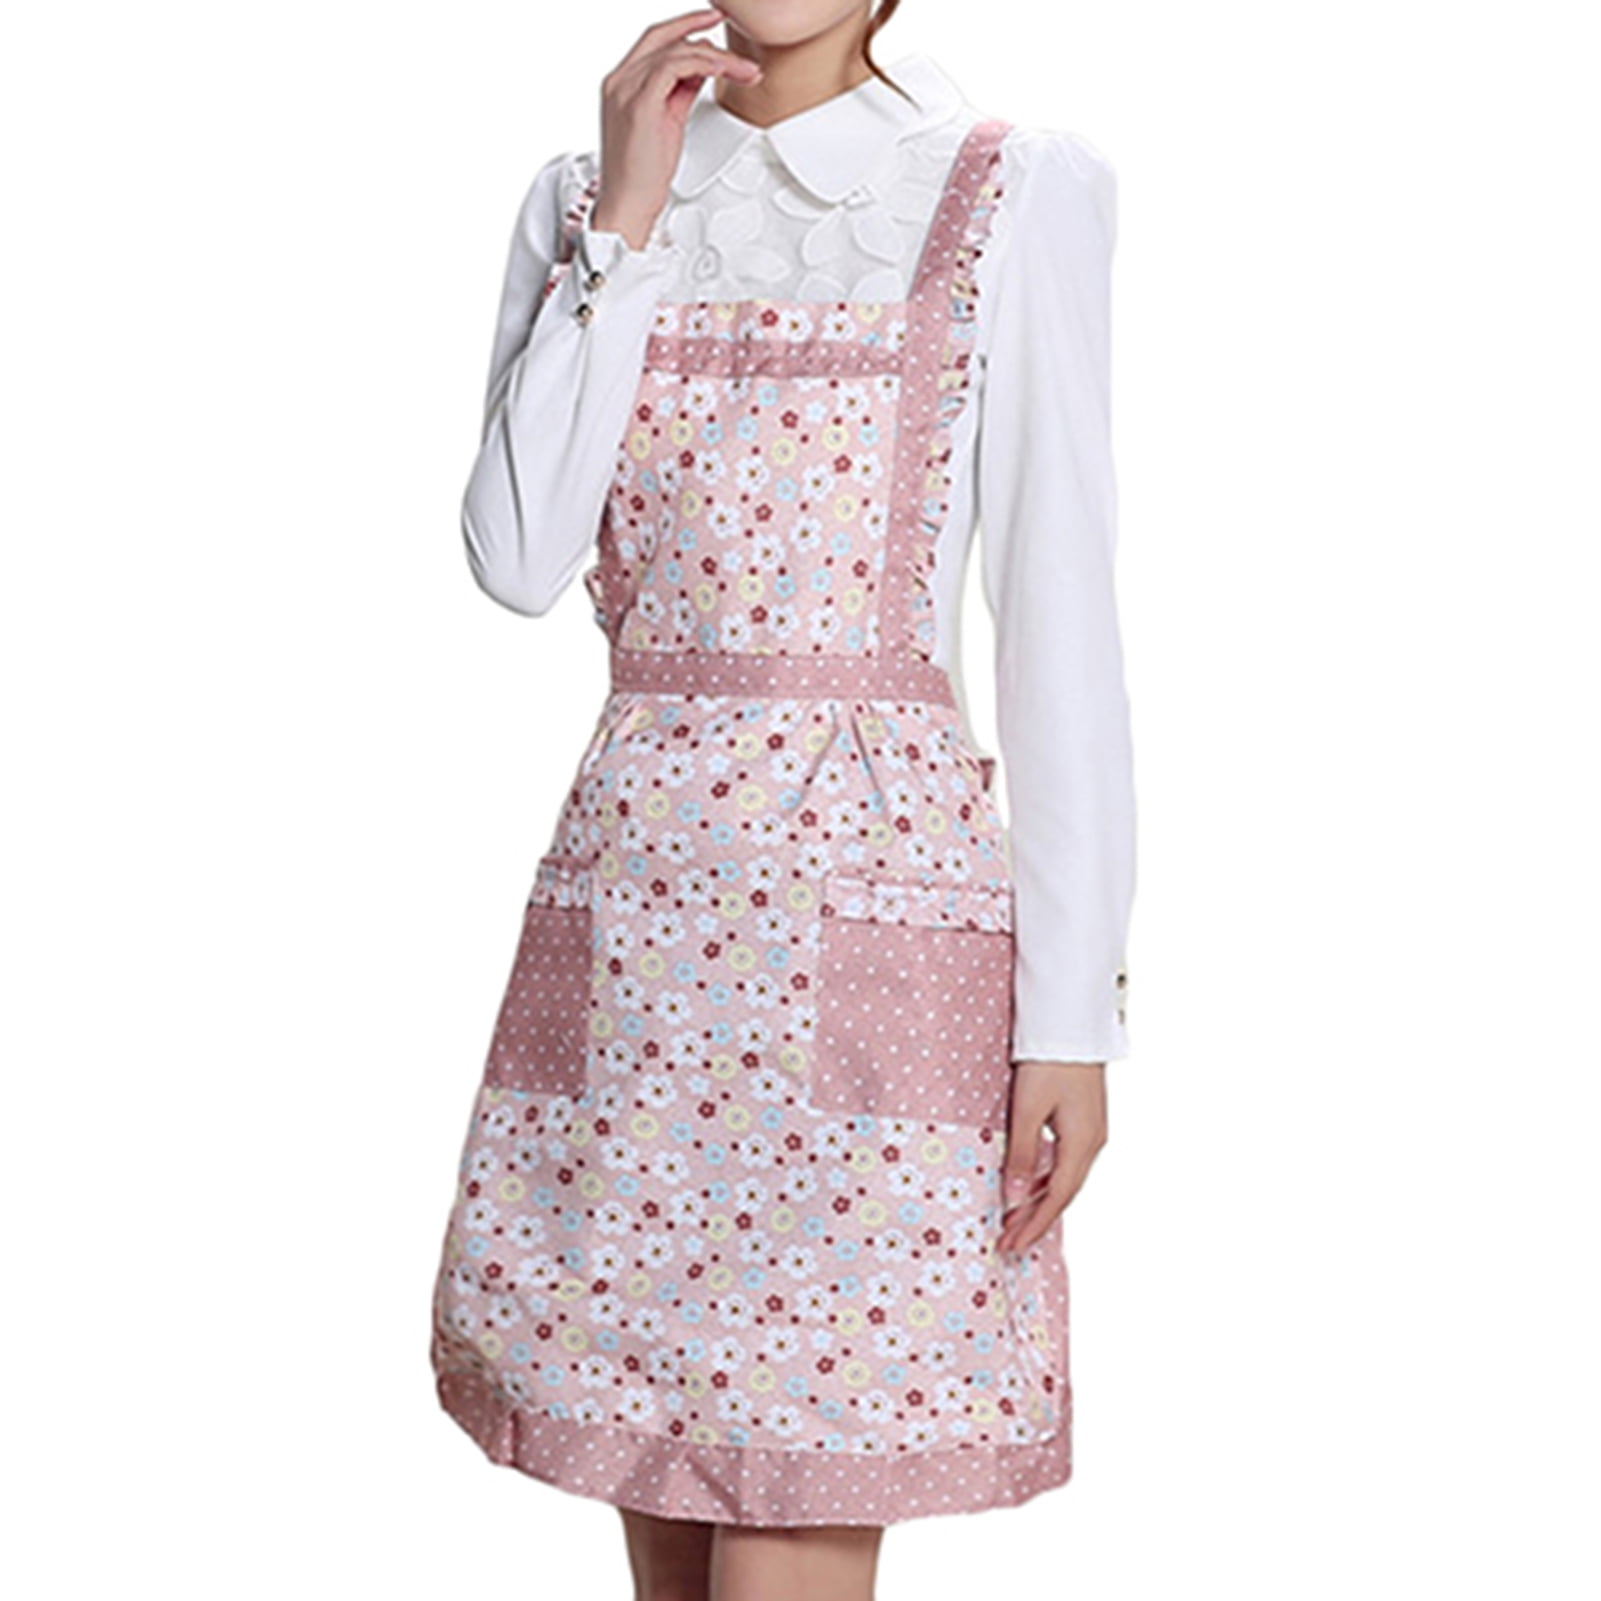 Women bib comfy adjustable cooking chef kitchen Restaurant apron with pocket 